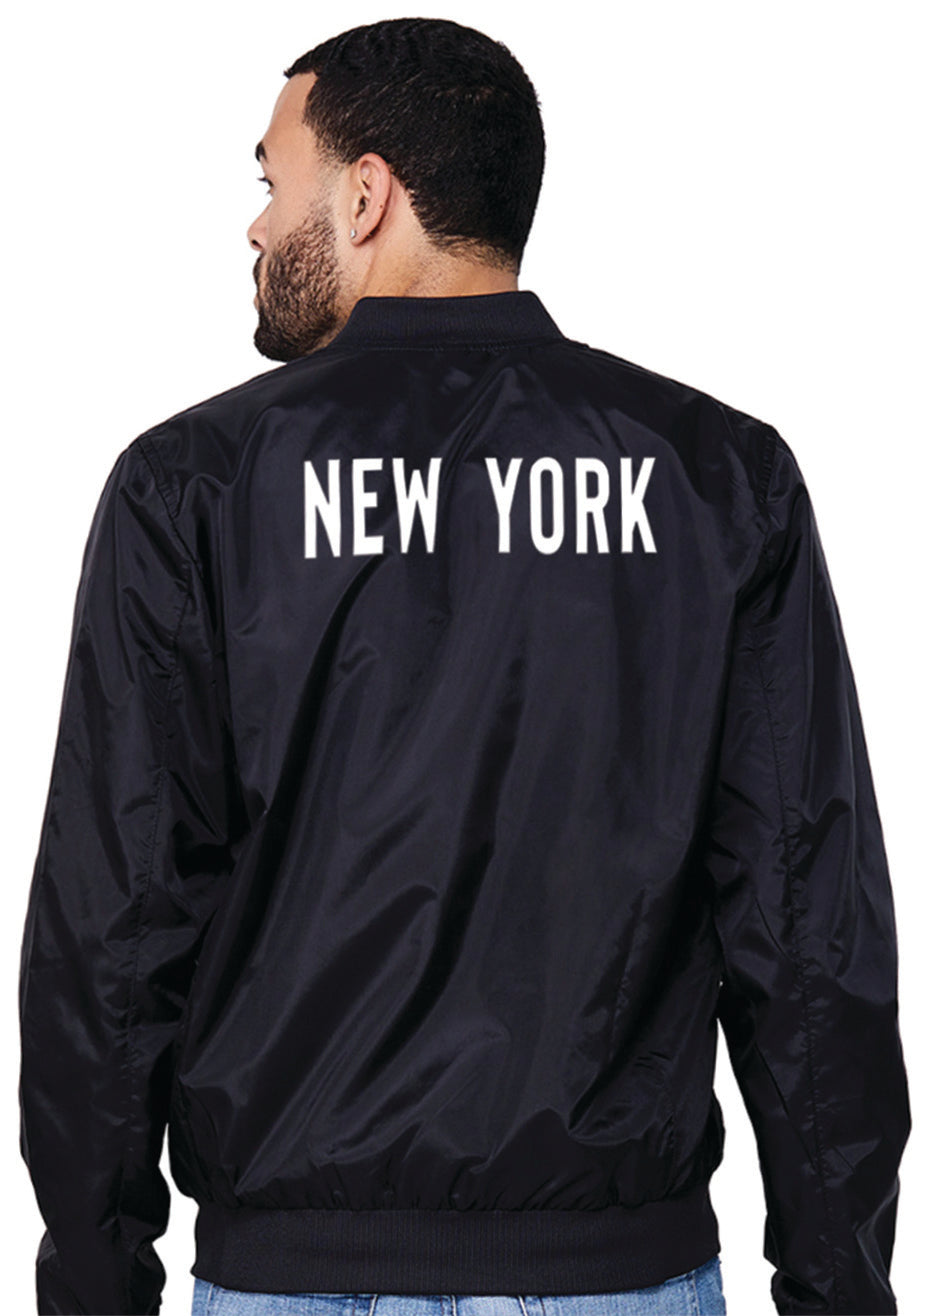 New York Bomber Jacket